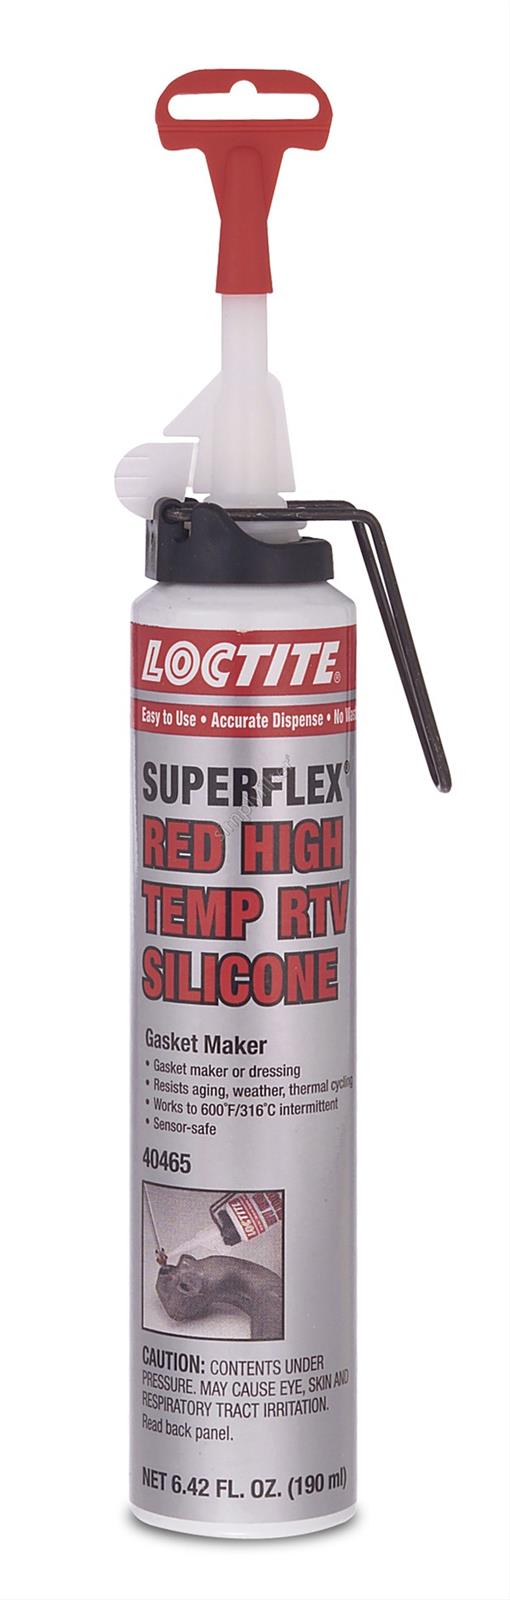 SI 596 High Temp RTV Silicone Adhesive Sealant | Loctite 2638165